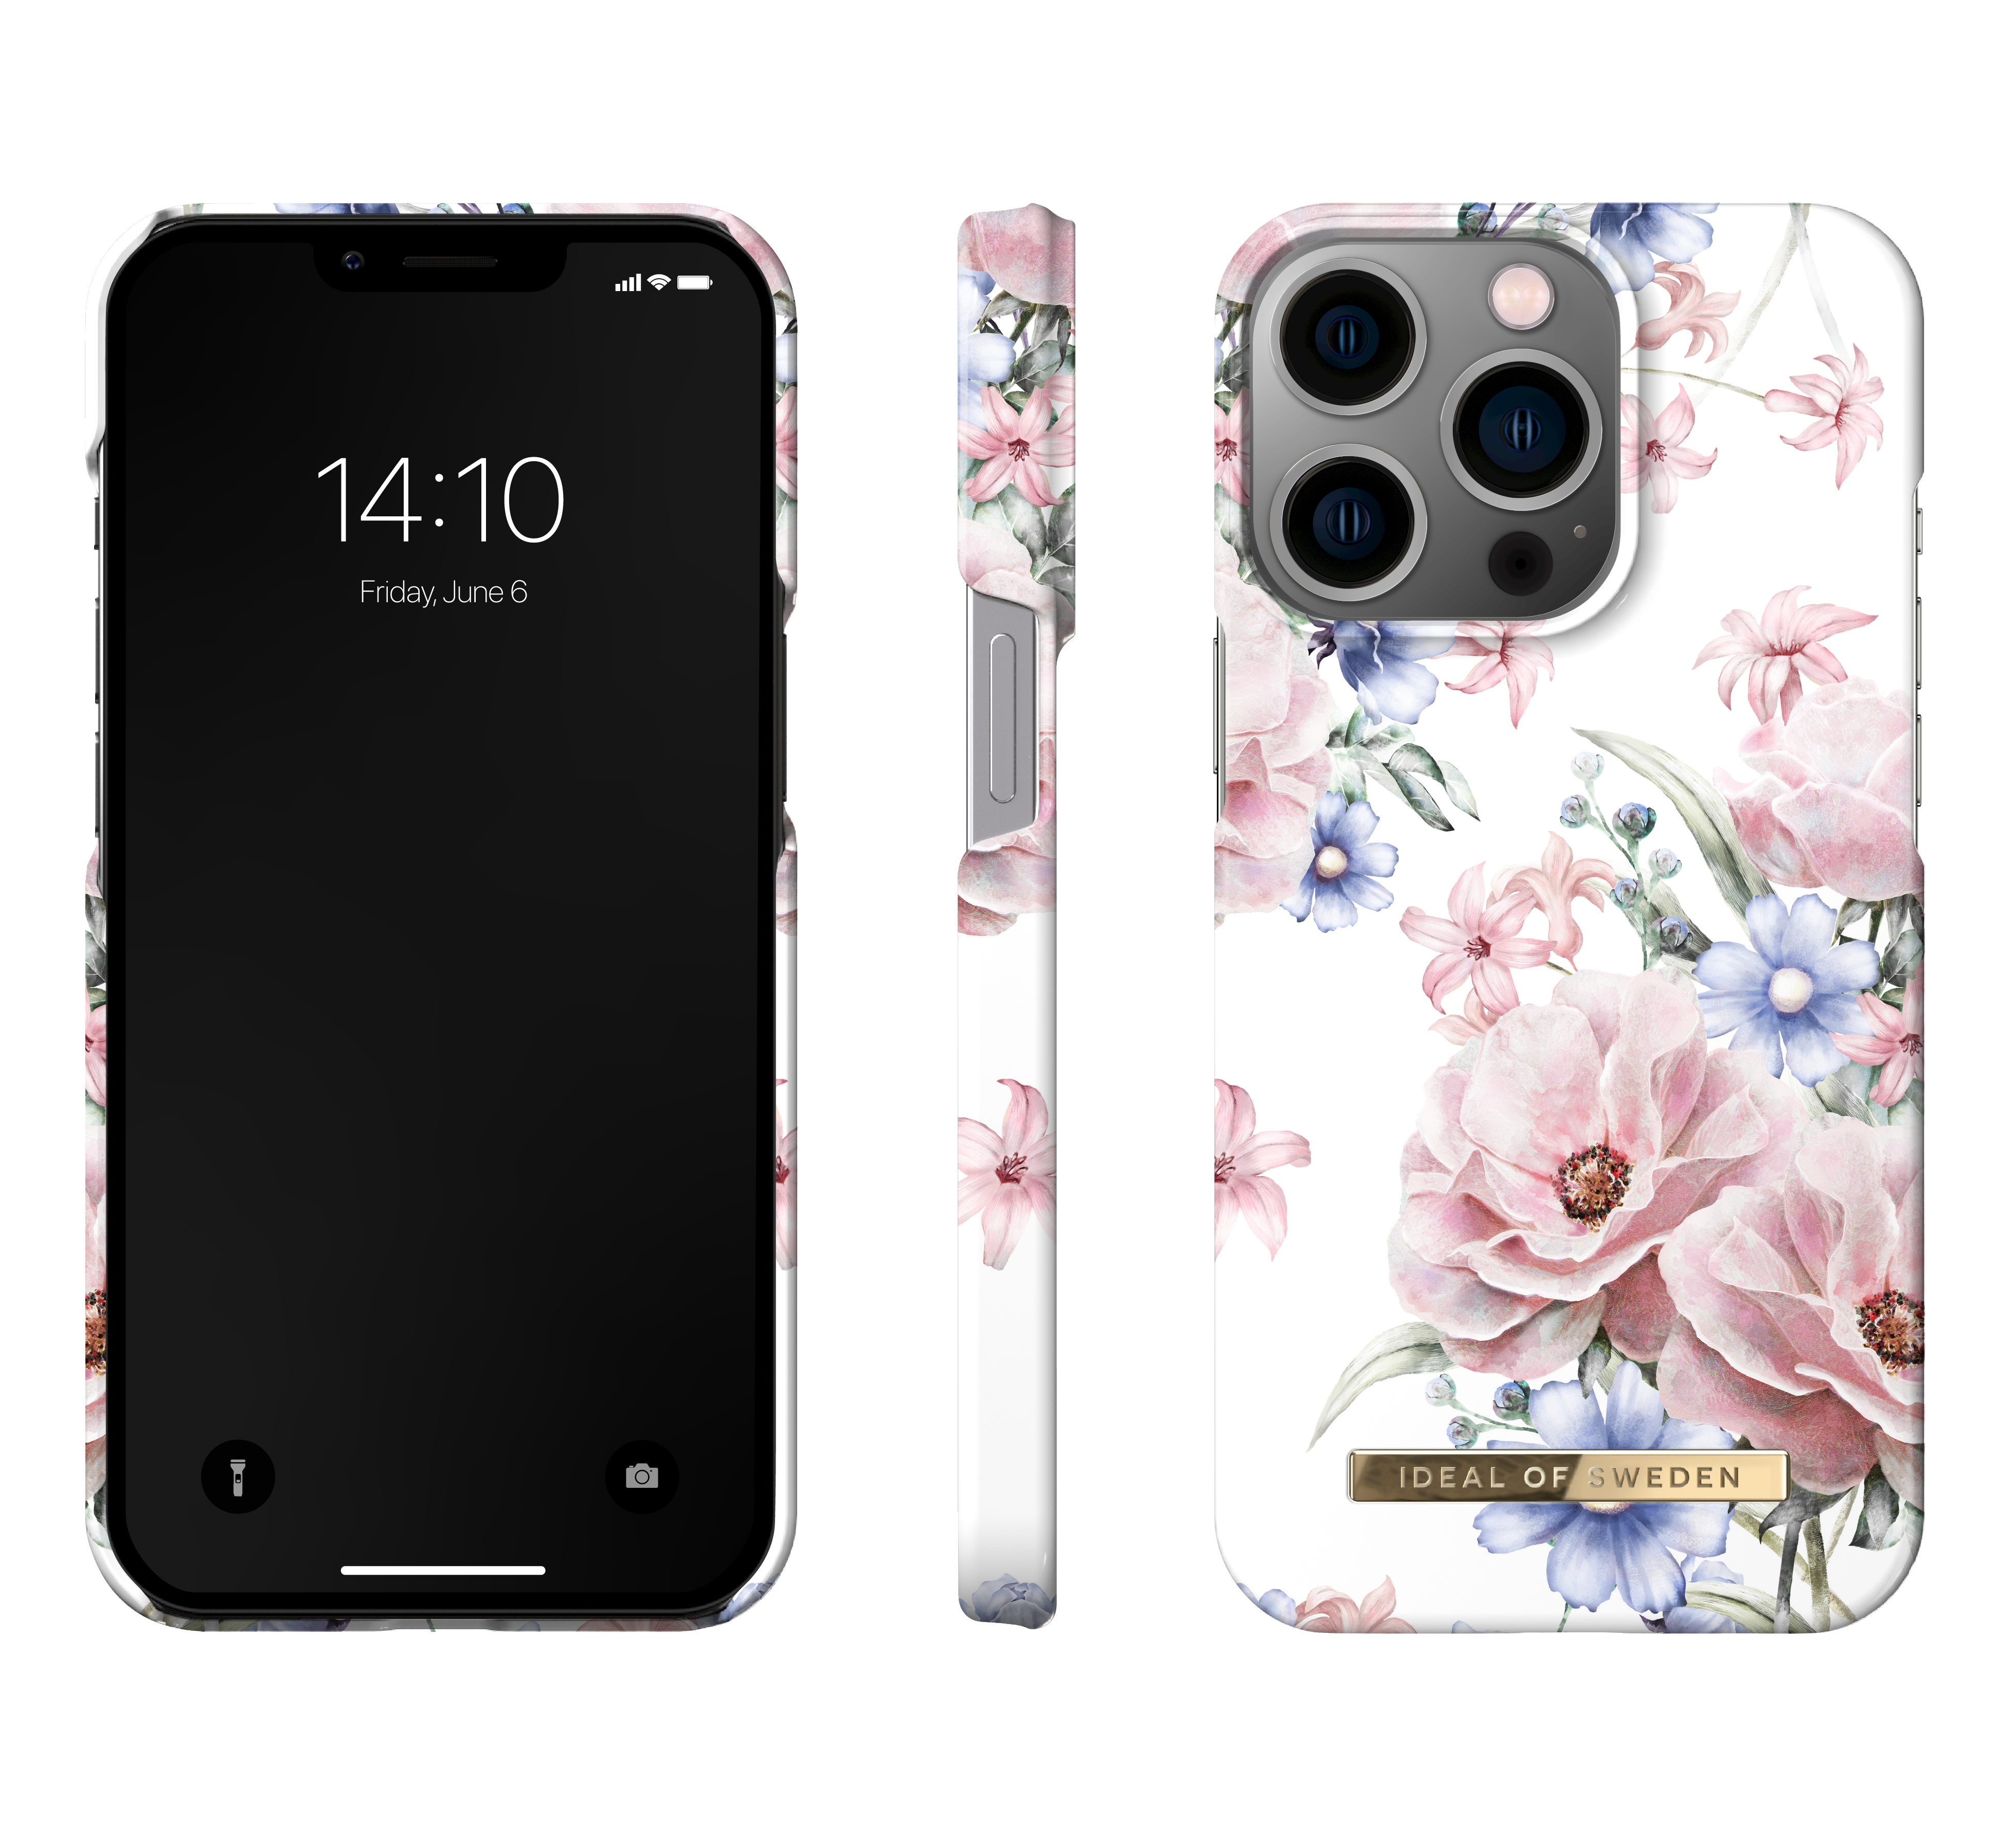 Cover Fashion Case iPhone 13 Pro Floral Romance